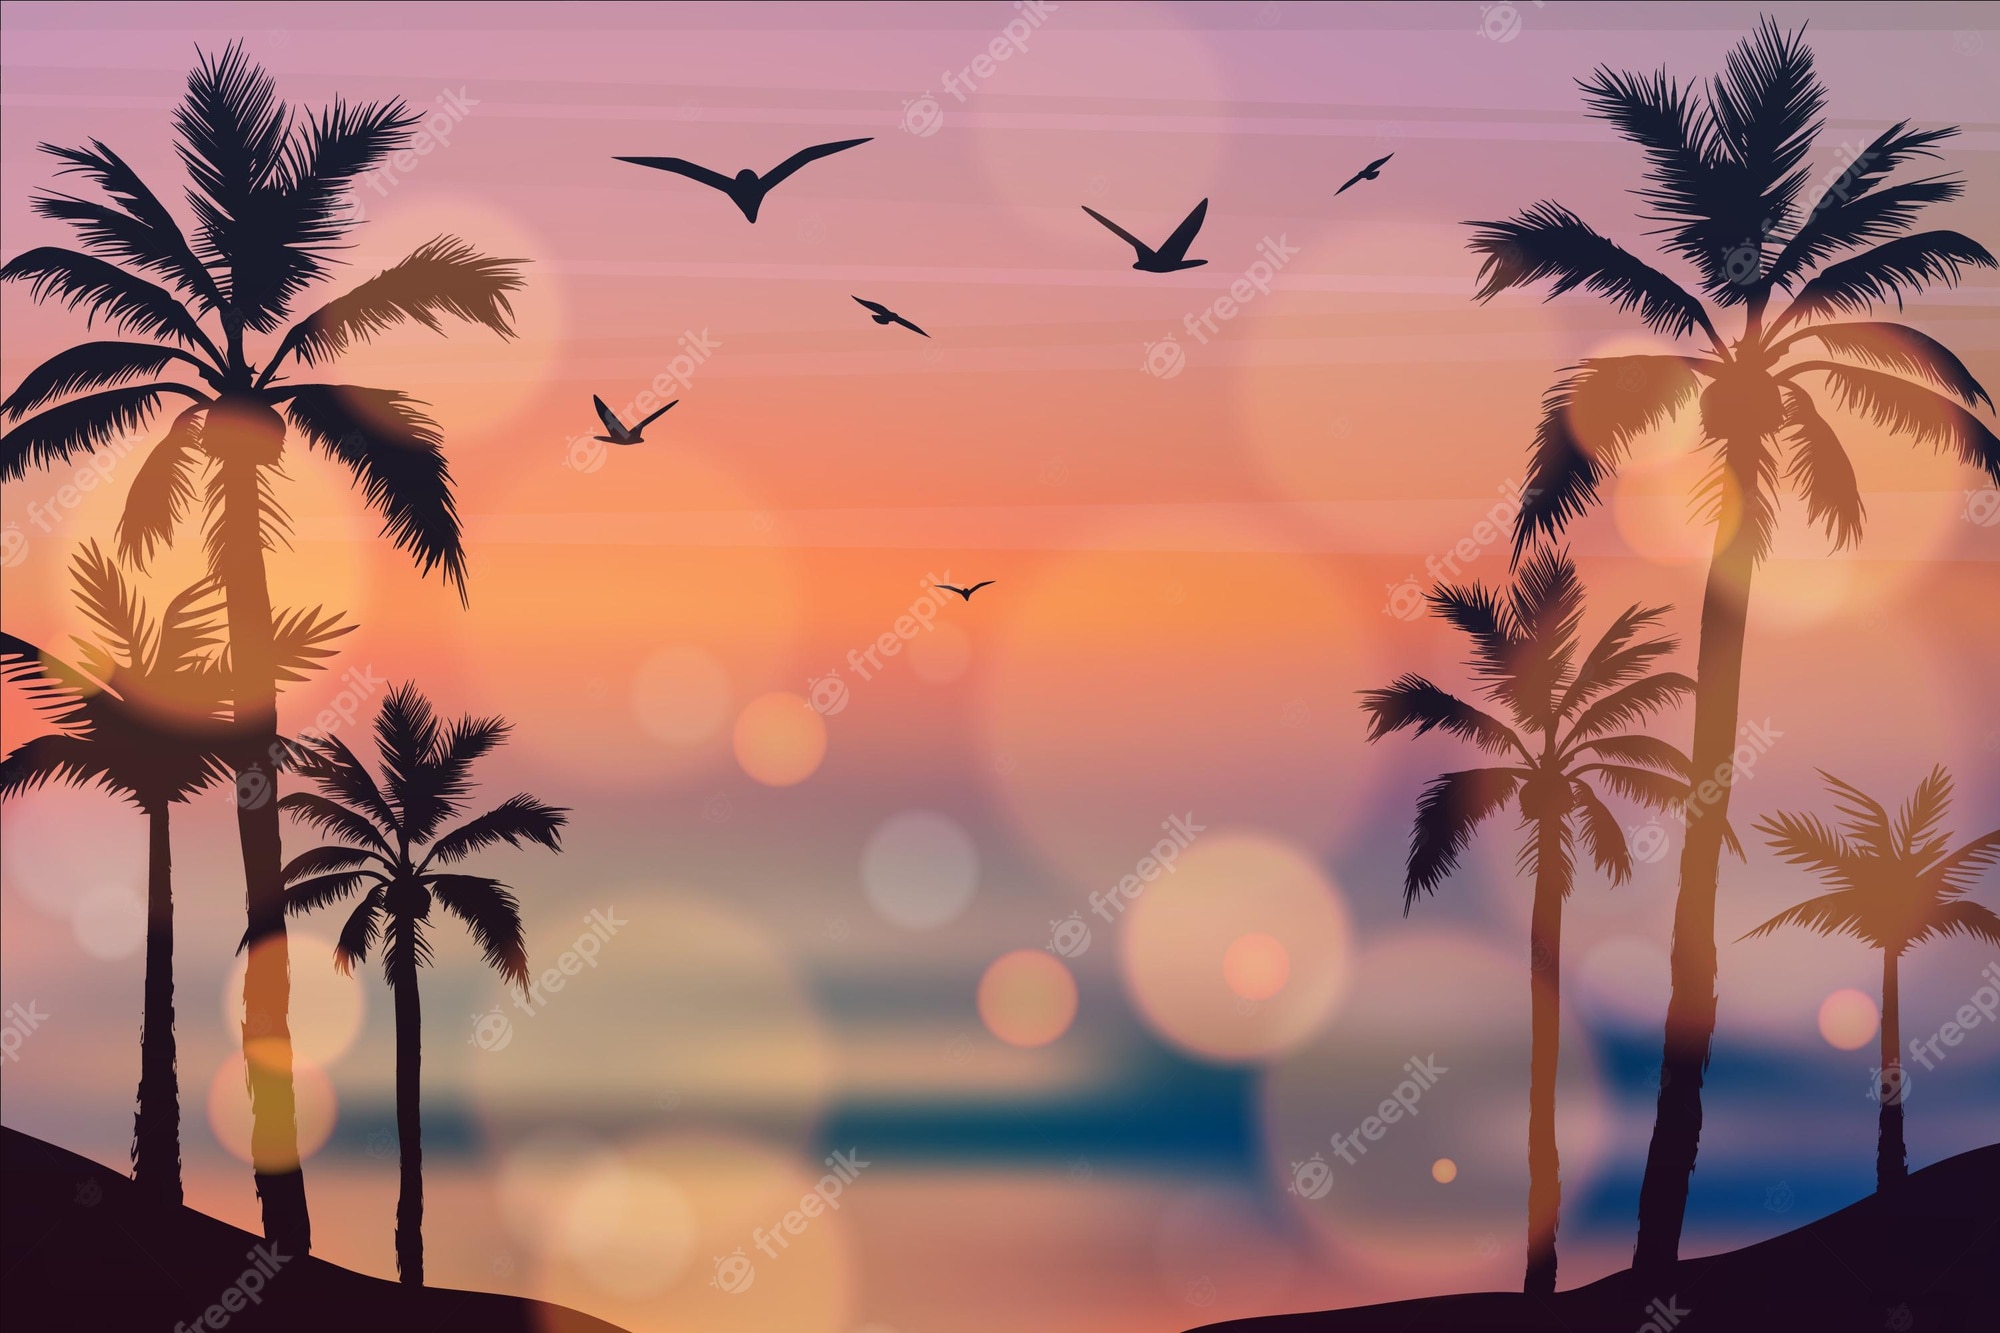 Free Happy Pink Beach Sunset Image: Stunning Photography